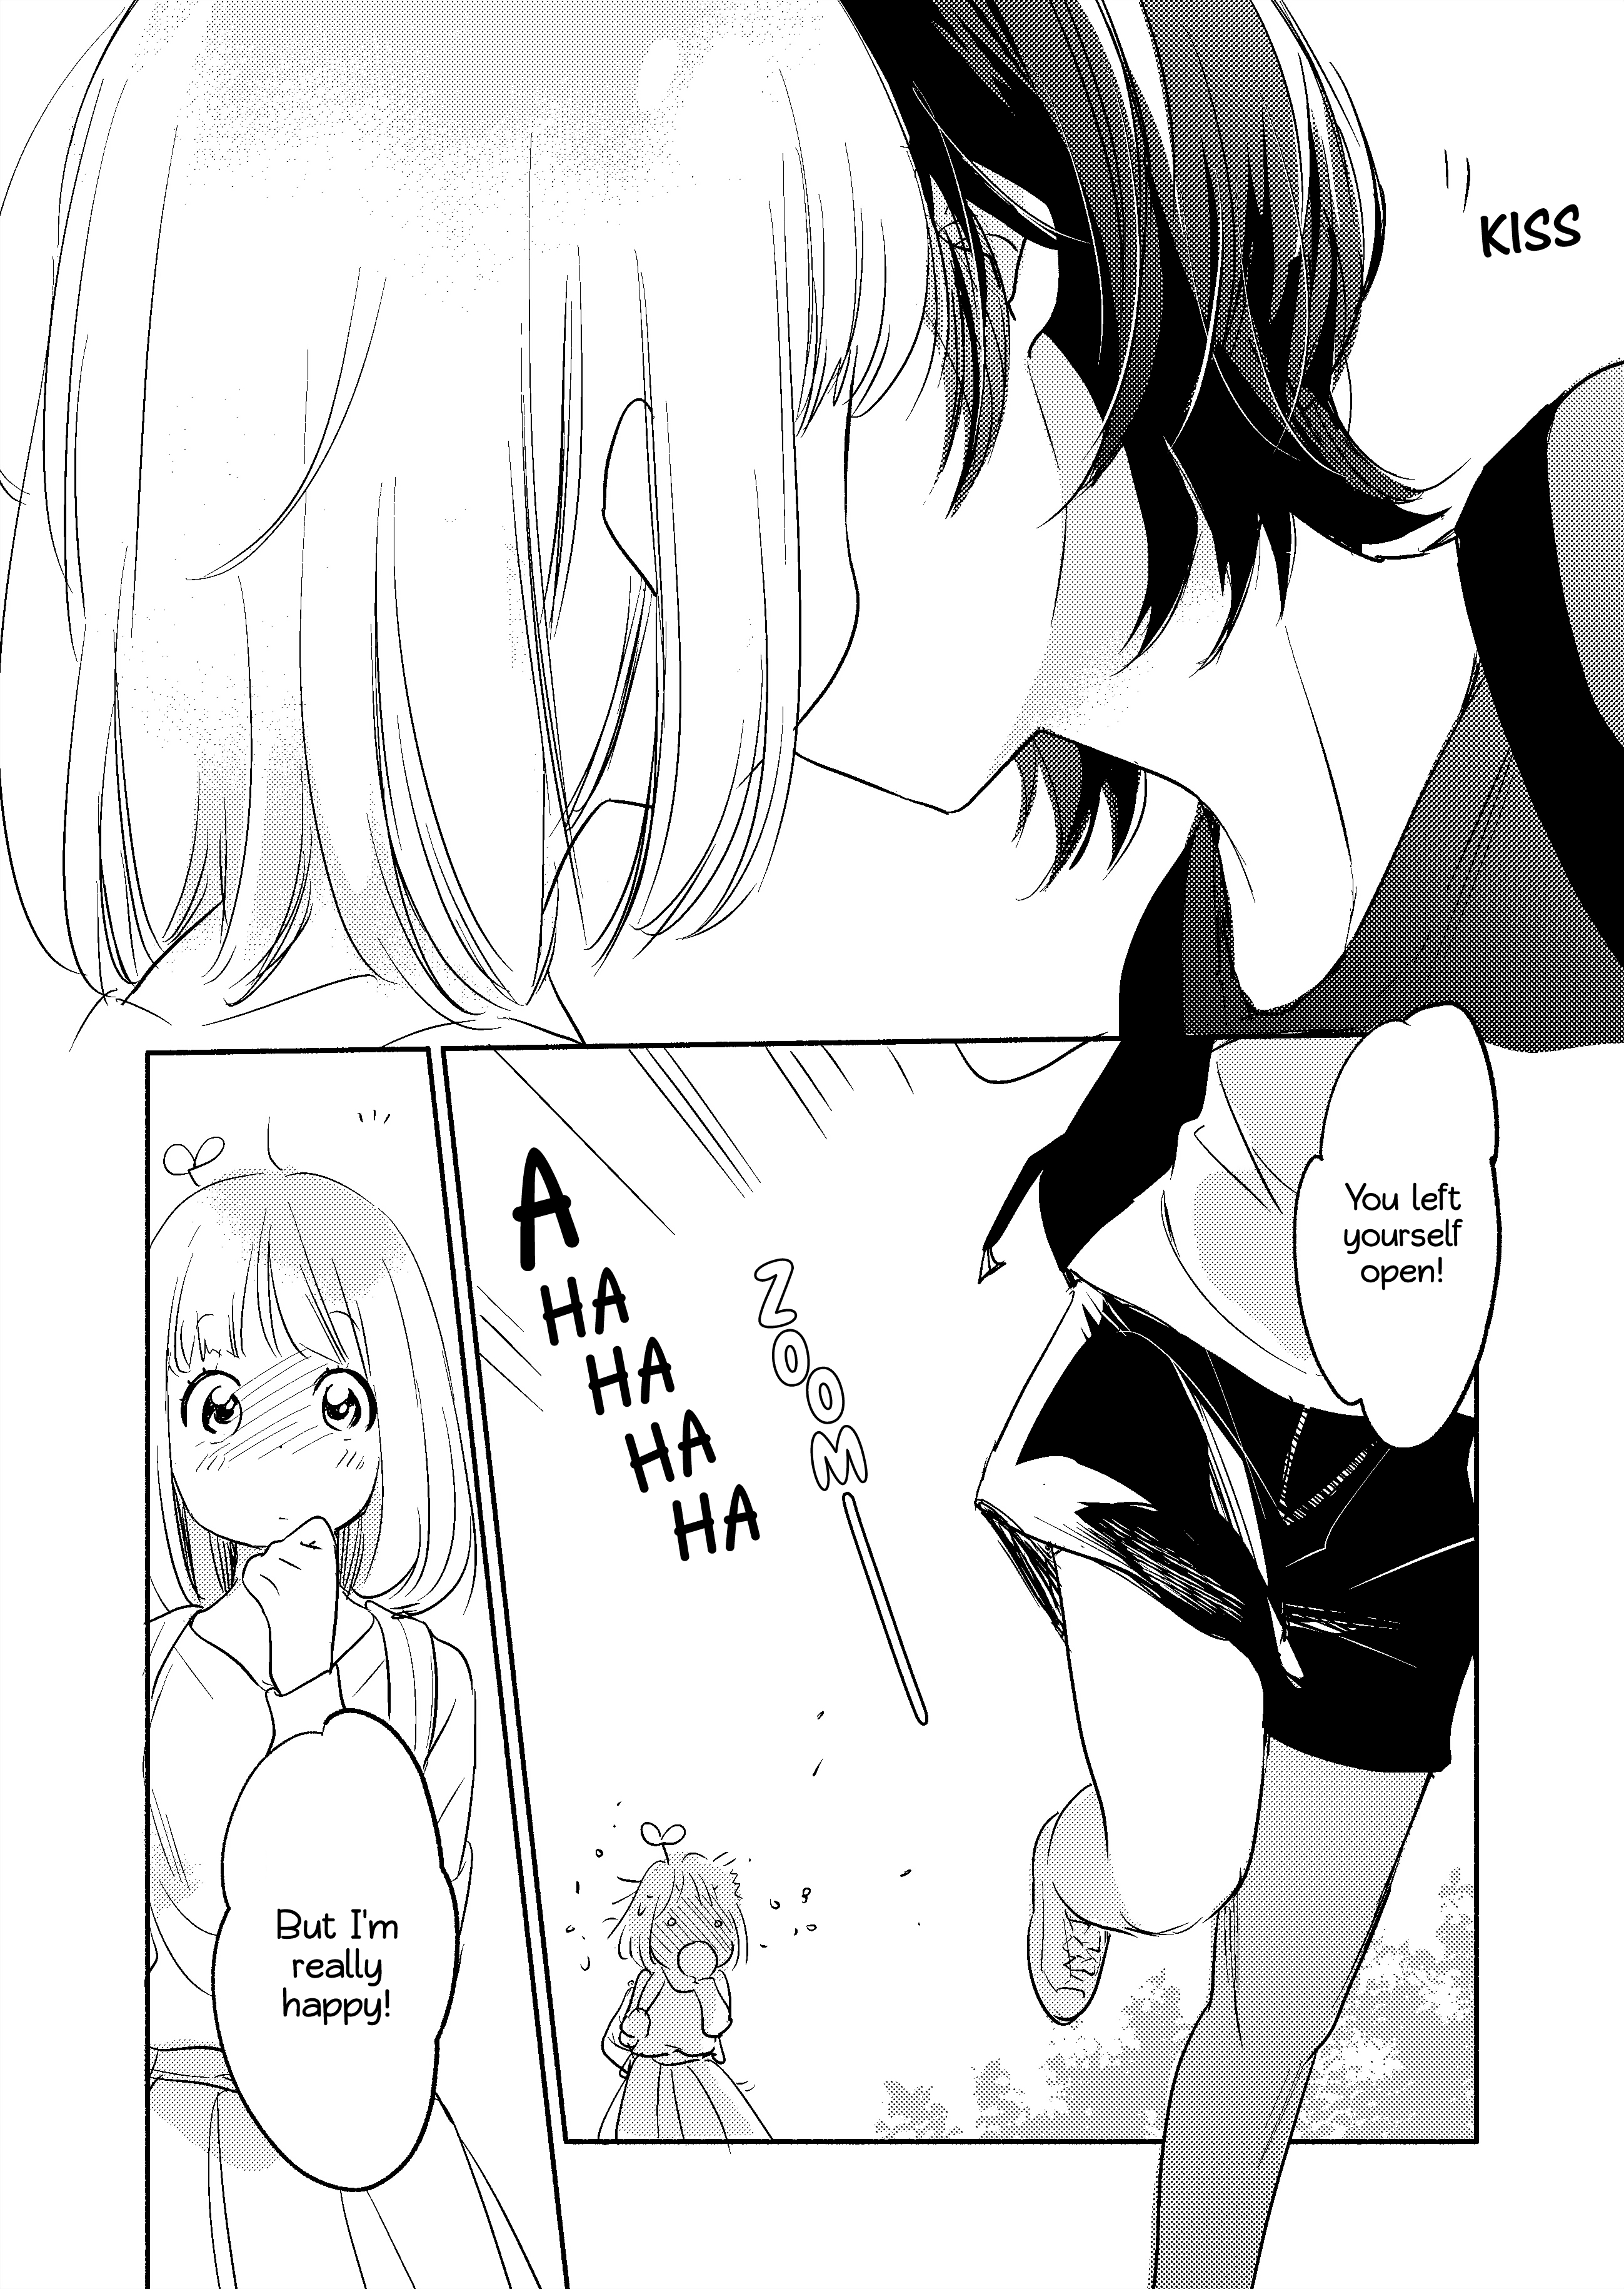 Yamada To Kase-San - Page 4